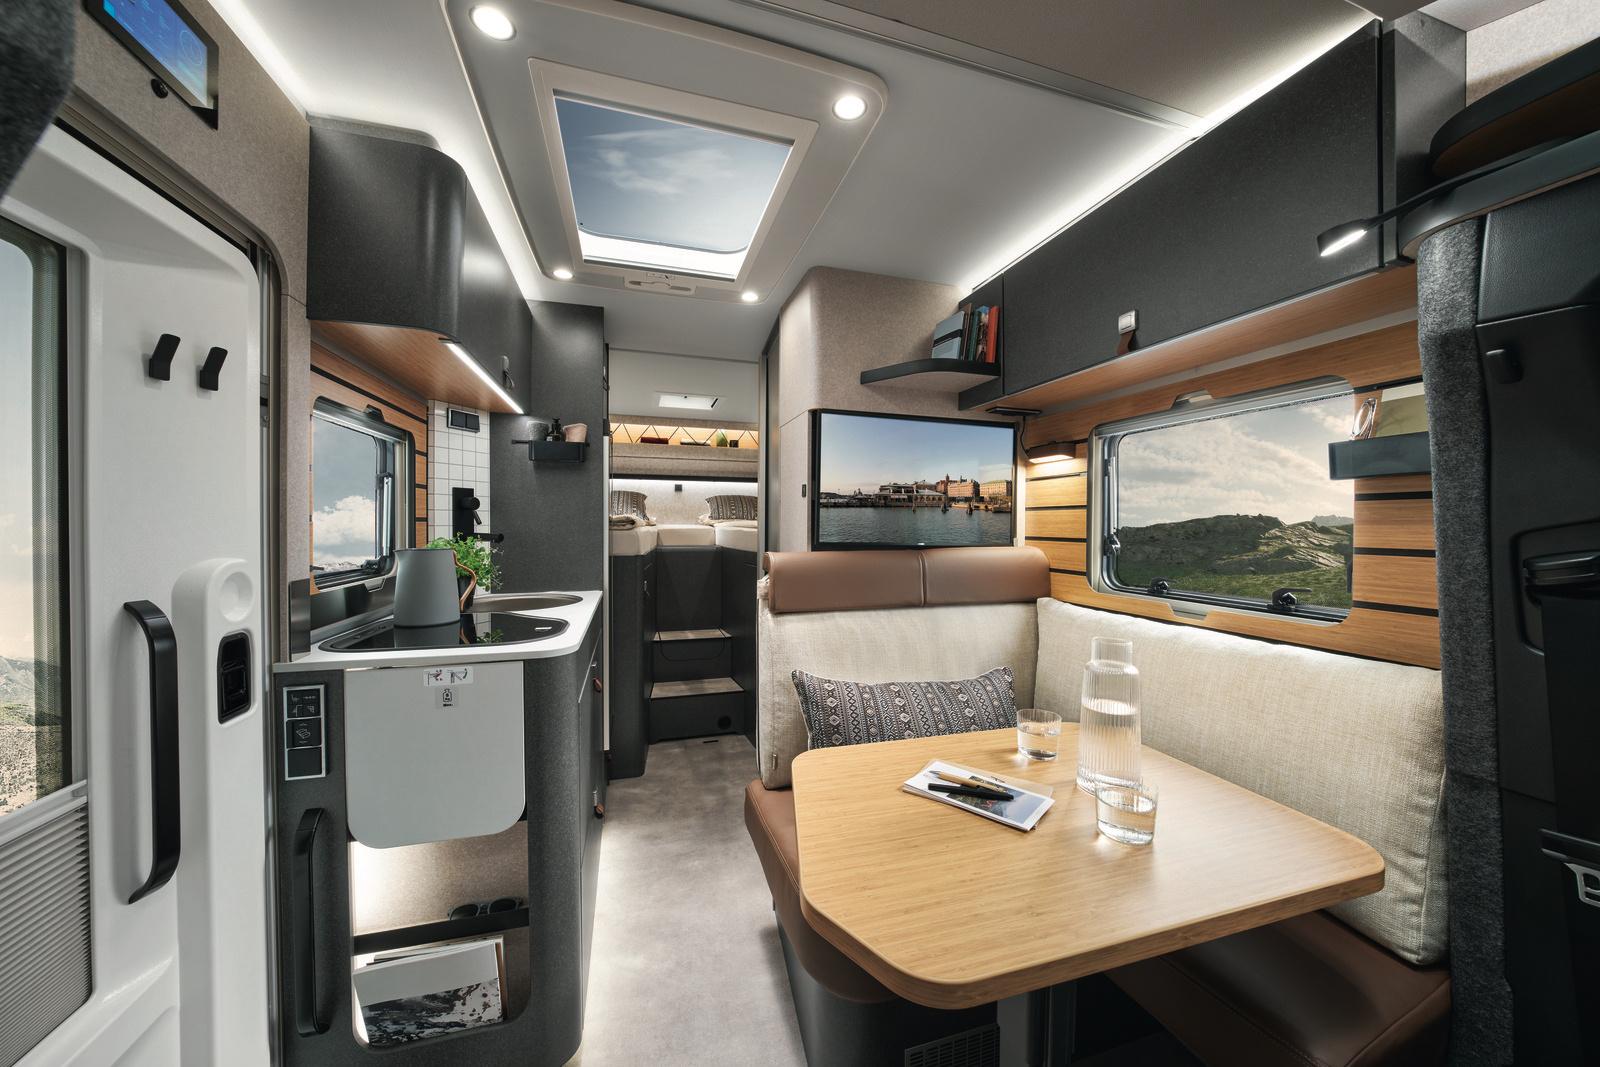 Grand confort ! Camping-car PLA G-Line 938 - Achat de camping car neuf et  occasion sur Toulon - Ambiance Loisirs